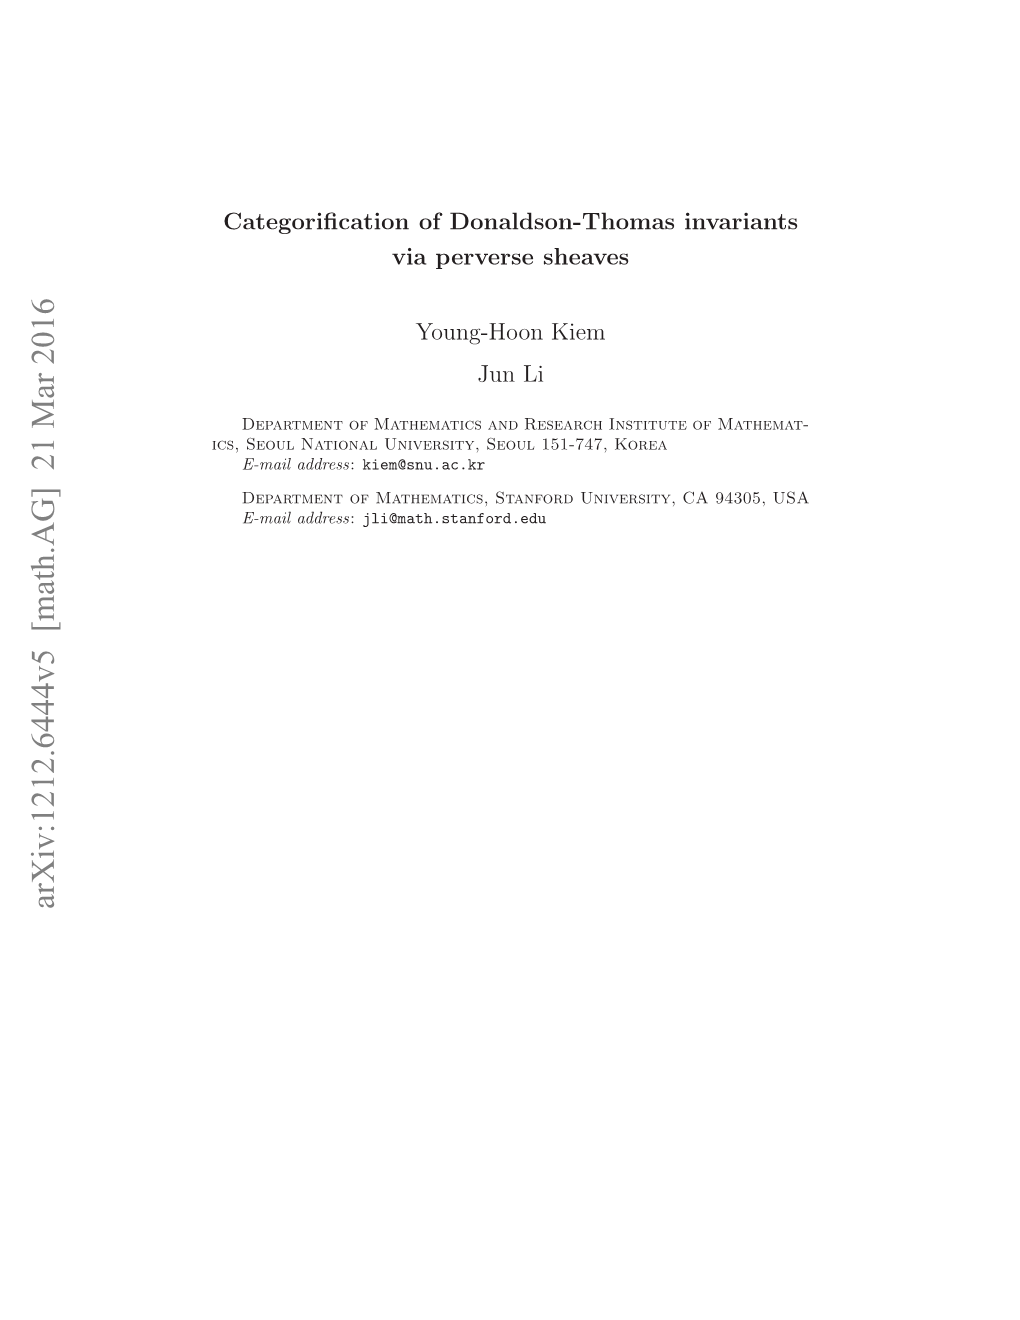 Categorification of Donaldson-Thomas Invariants Via Perverse Sheaves